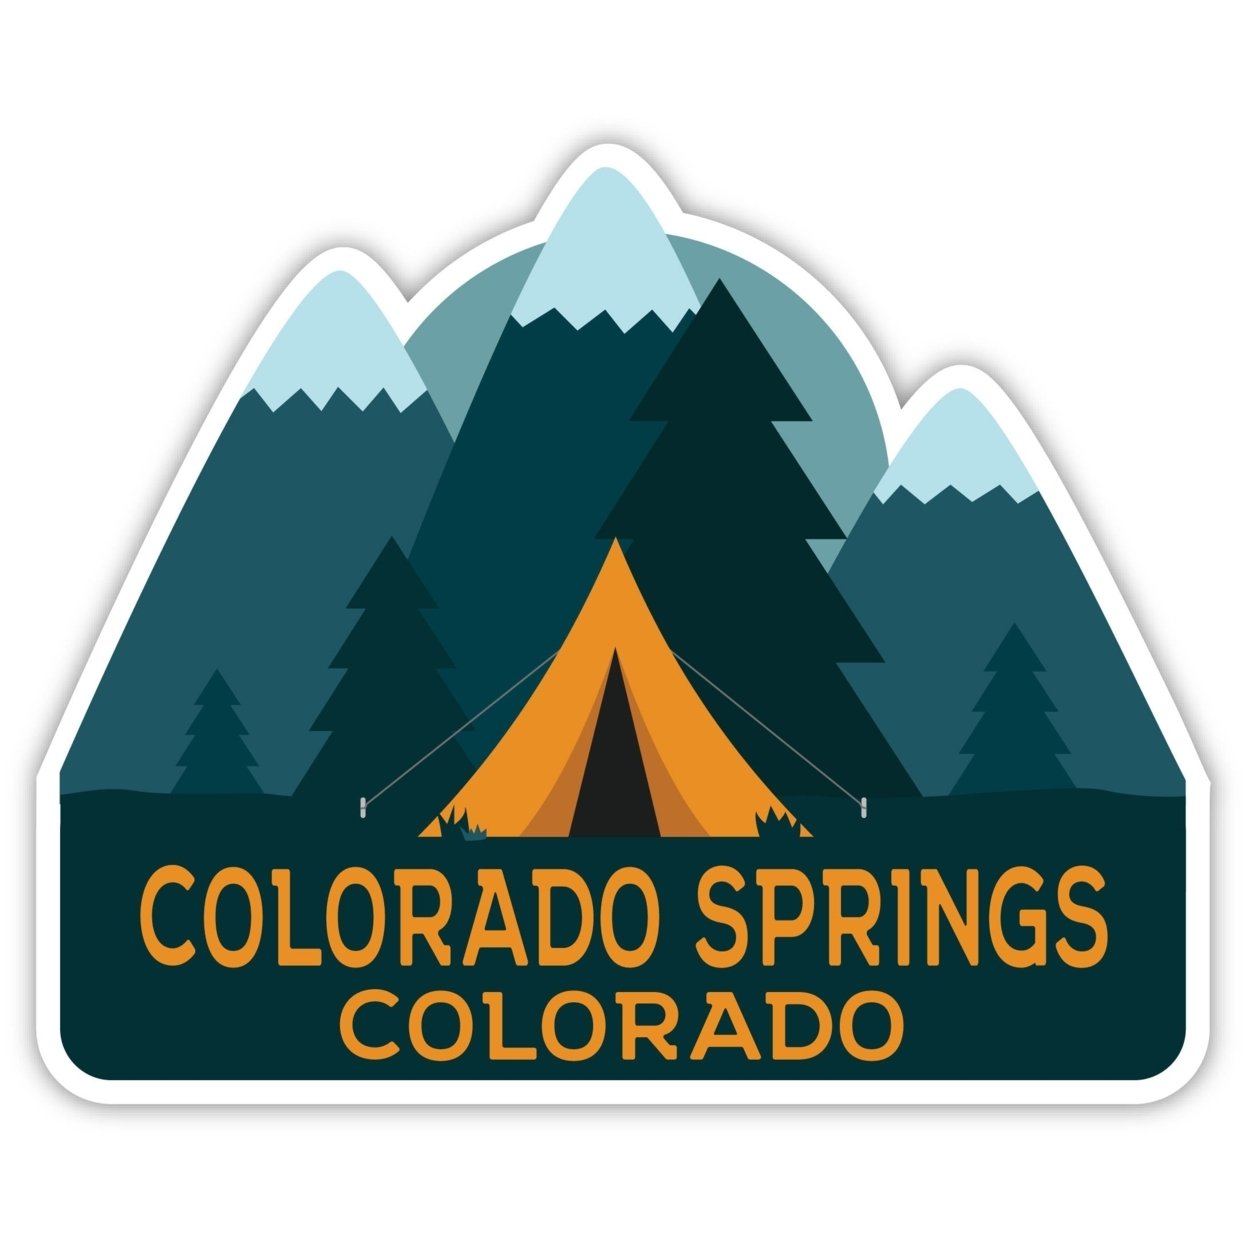 Colorado Springs Colorado Souvenir Decorative Stickers (Choose Theme And Size) - Single Unit, 2-Inch, Tent